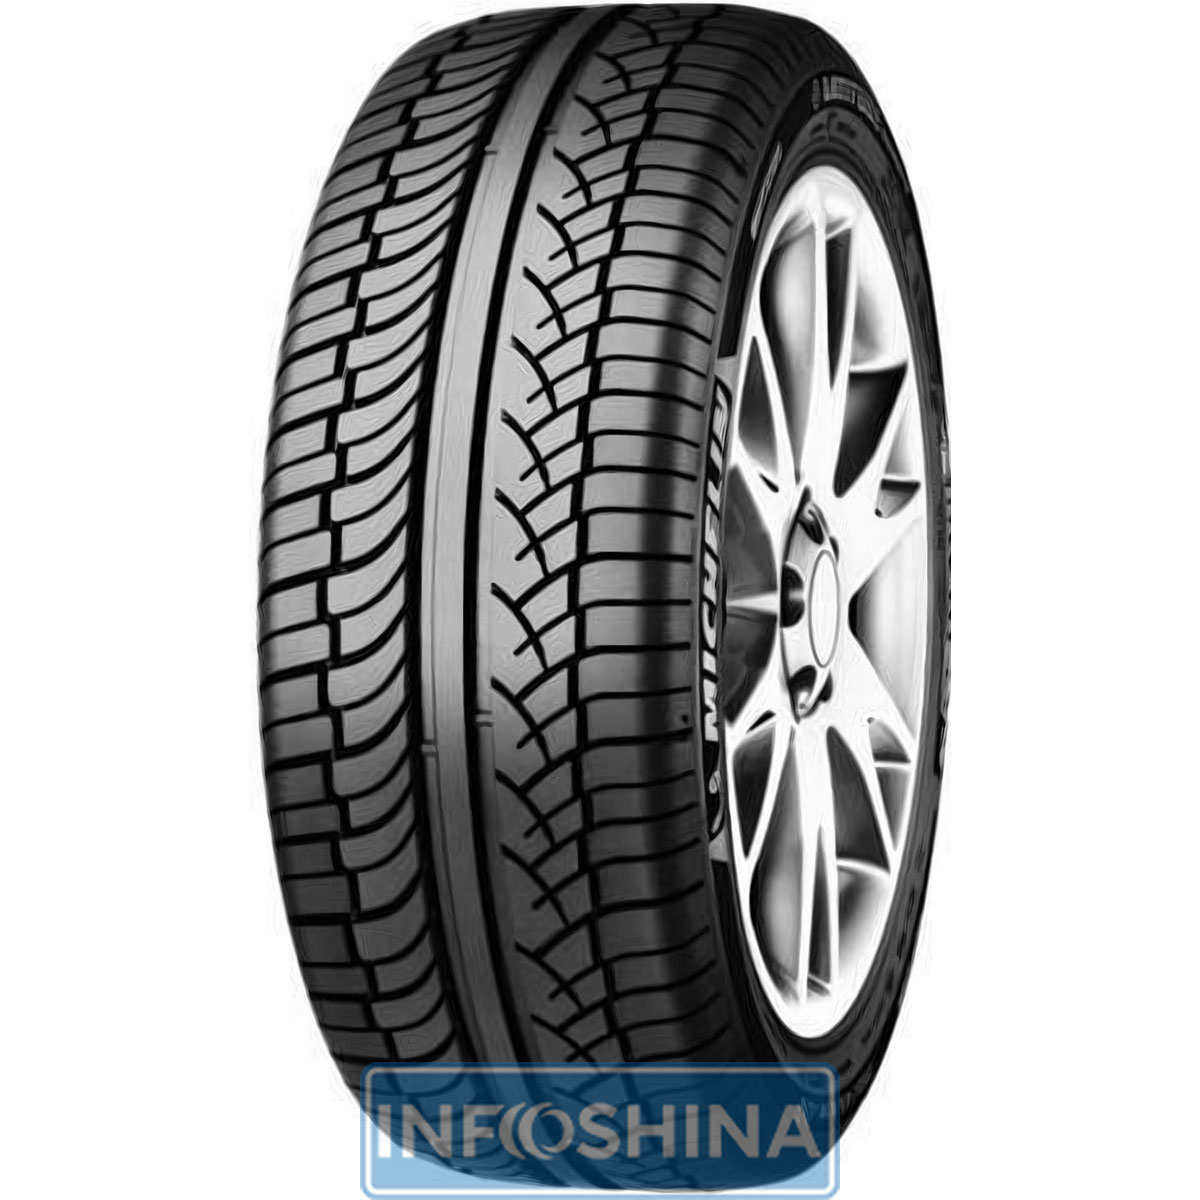 Купить шины Michelin Latitude Diamaris 275/40 R20 102W